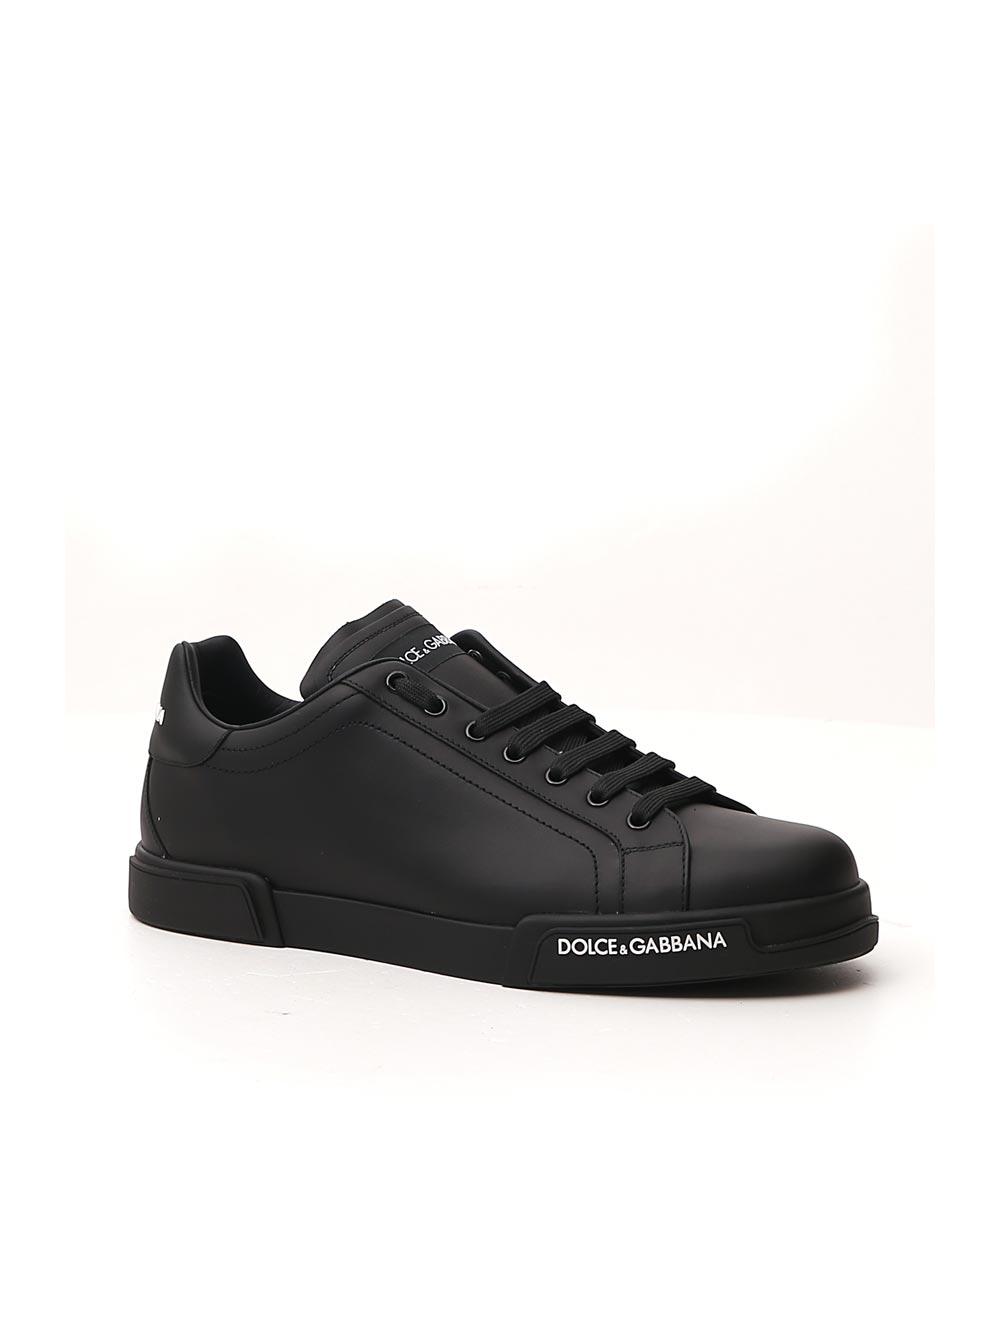 Dolce & Gabbana Leather Portofino Sneakers in Black for Men - Save 40% ...